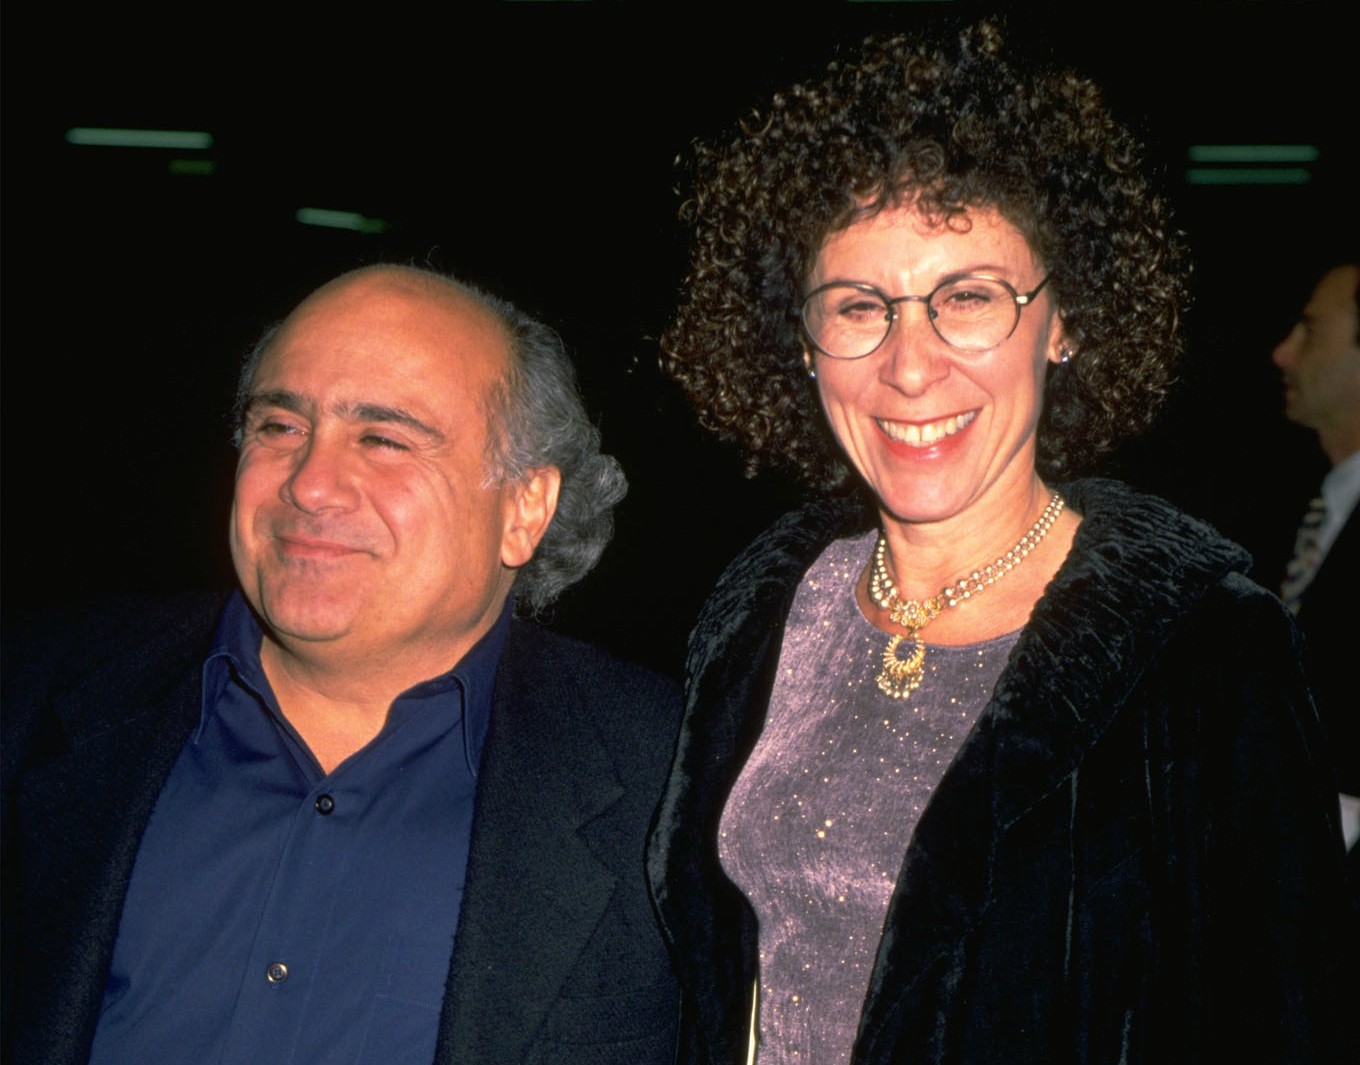 Danny DeVito e Rhea Perlman, casados desde janeiro de 1982. (Foto: Getty Images)